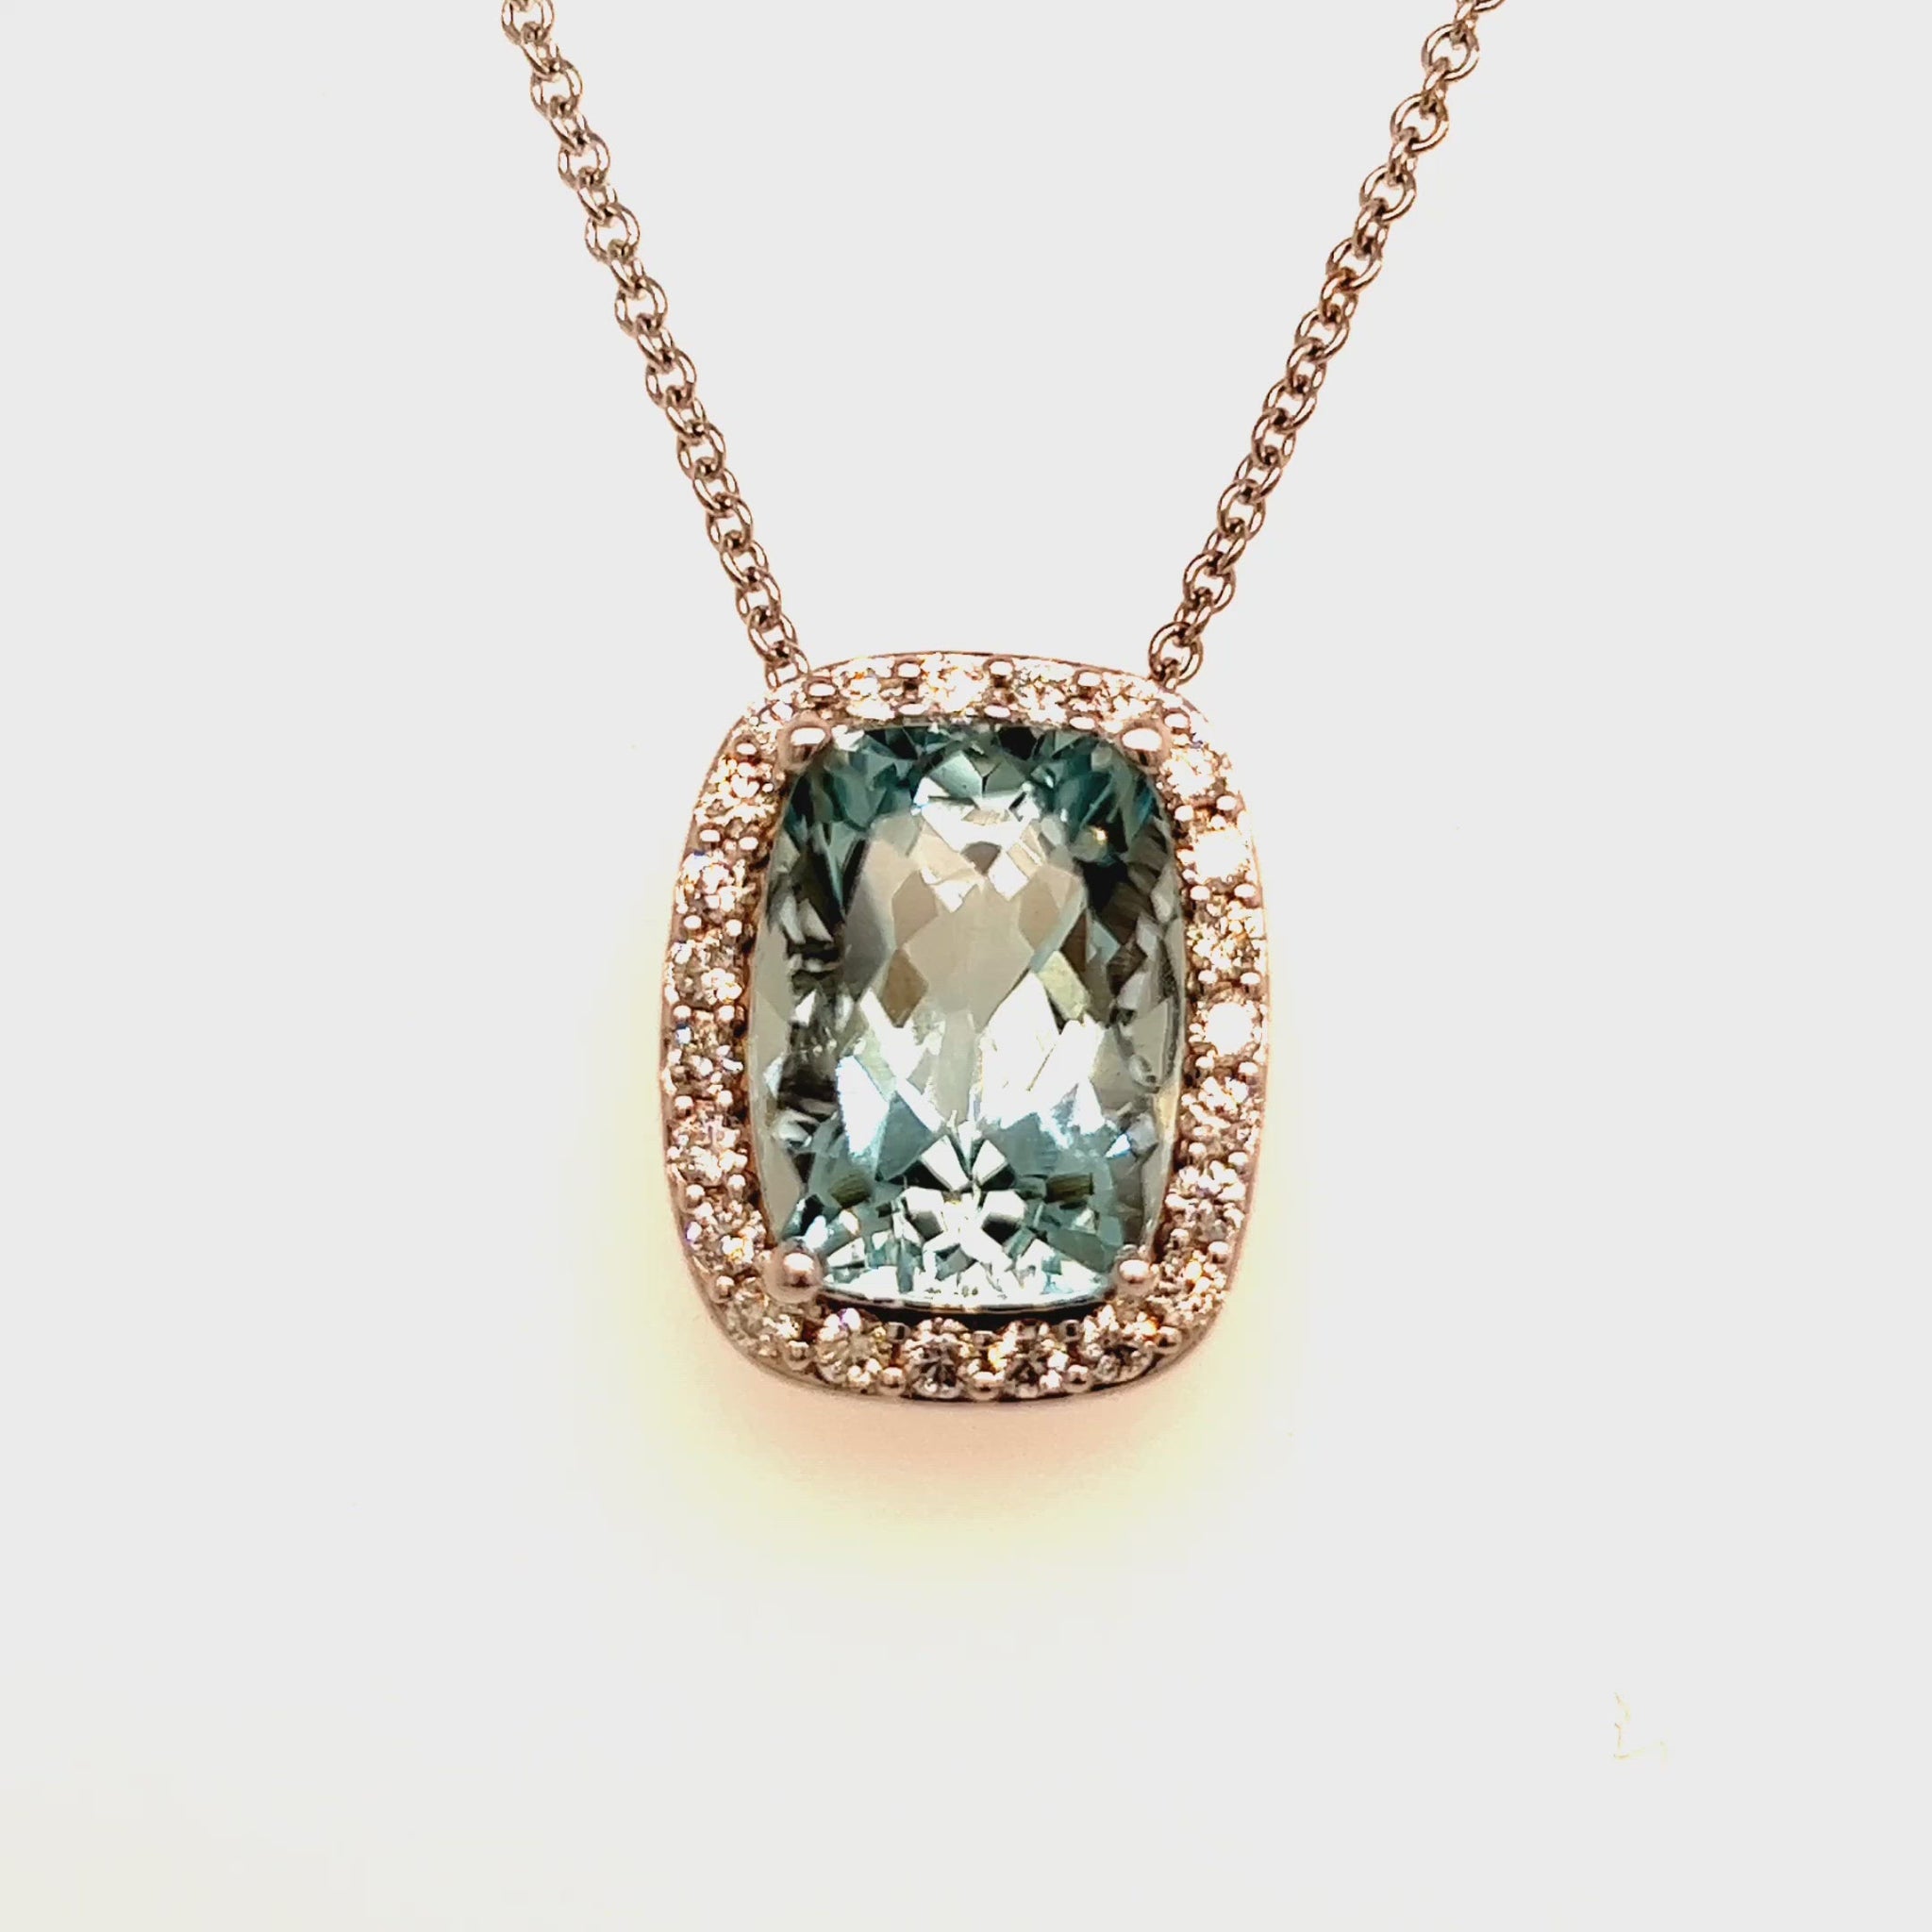 Diamond Aquamarine Pendant Necklace 14k Gold 17" 8.37 TCW Certified $5,950 213255